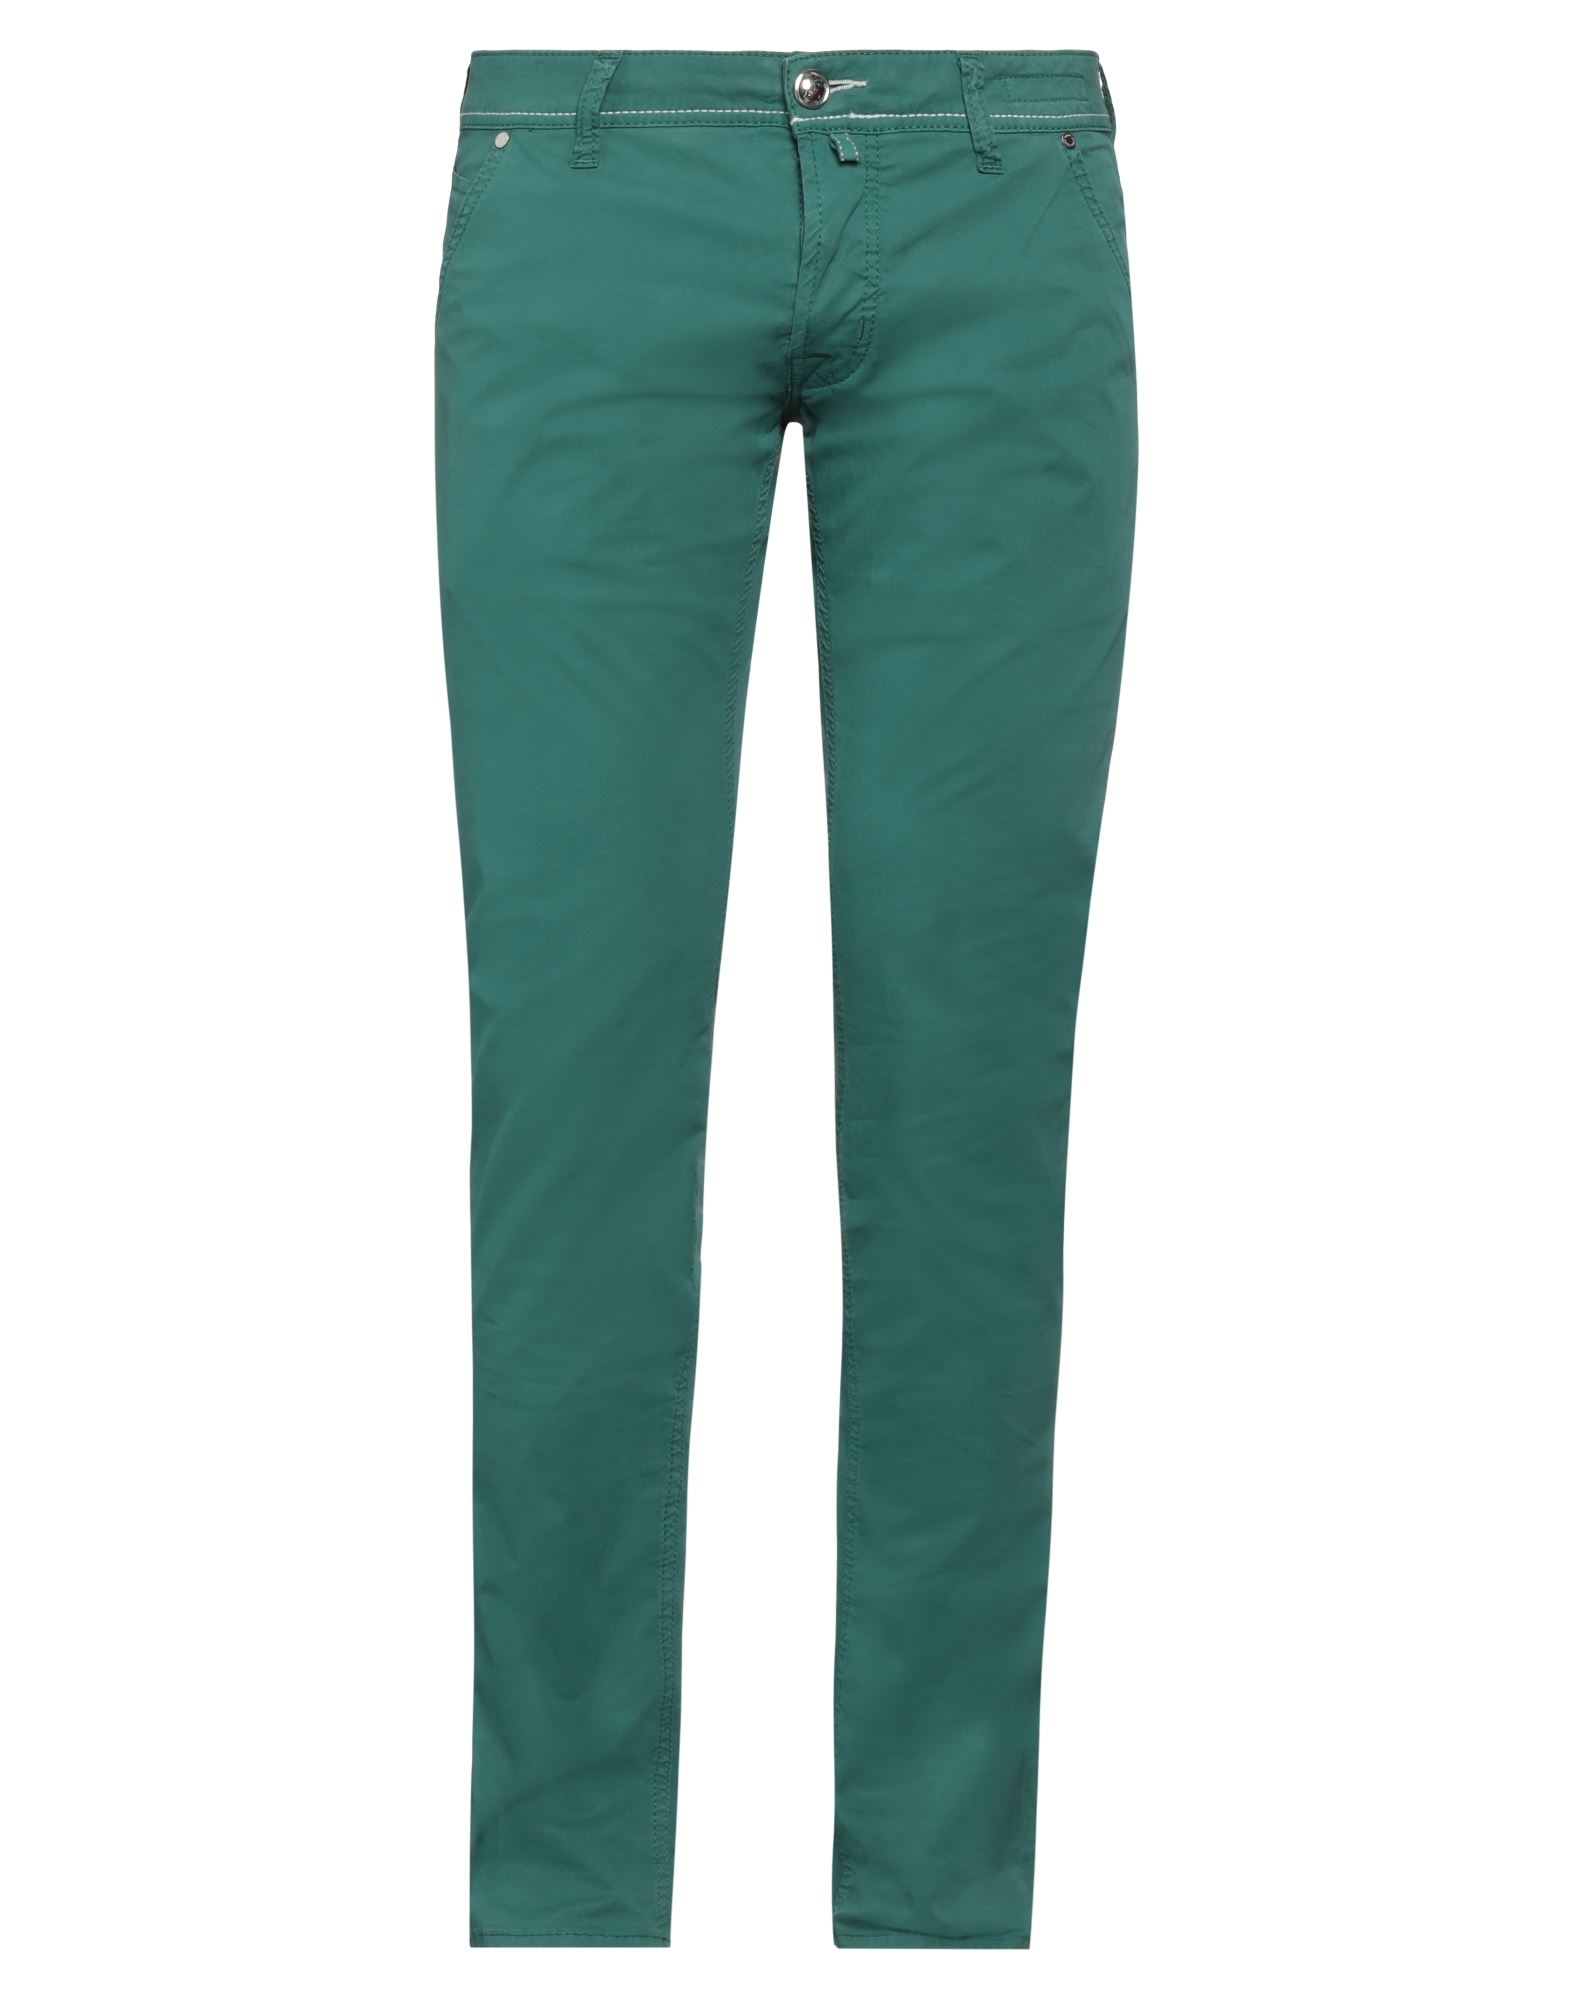 Jacob Cohёn Pants In Emerald Green